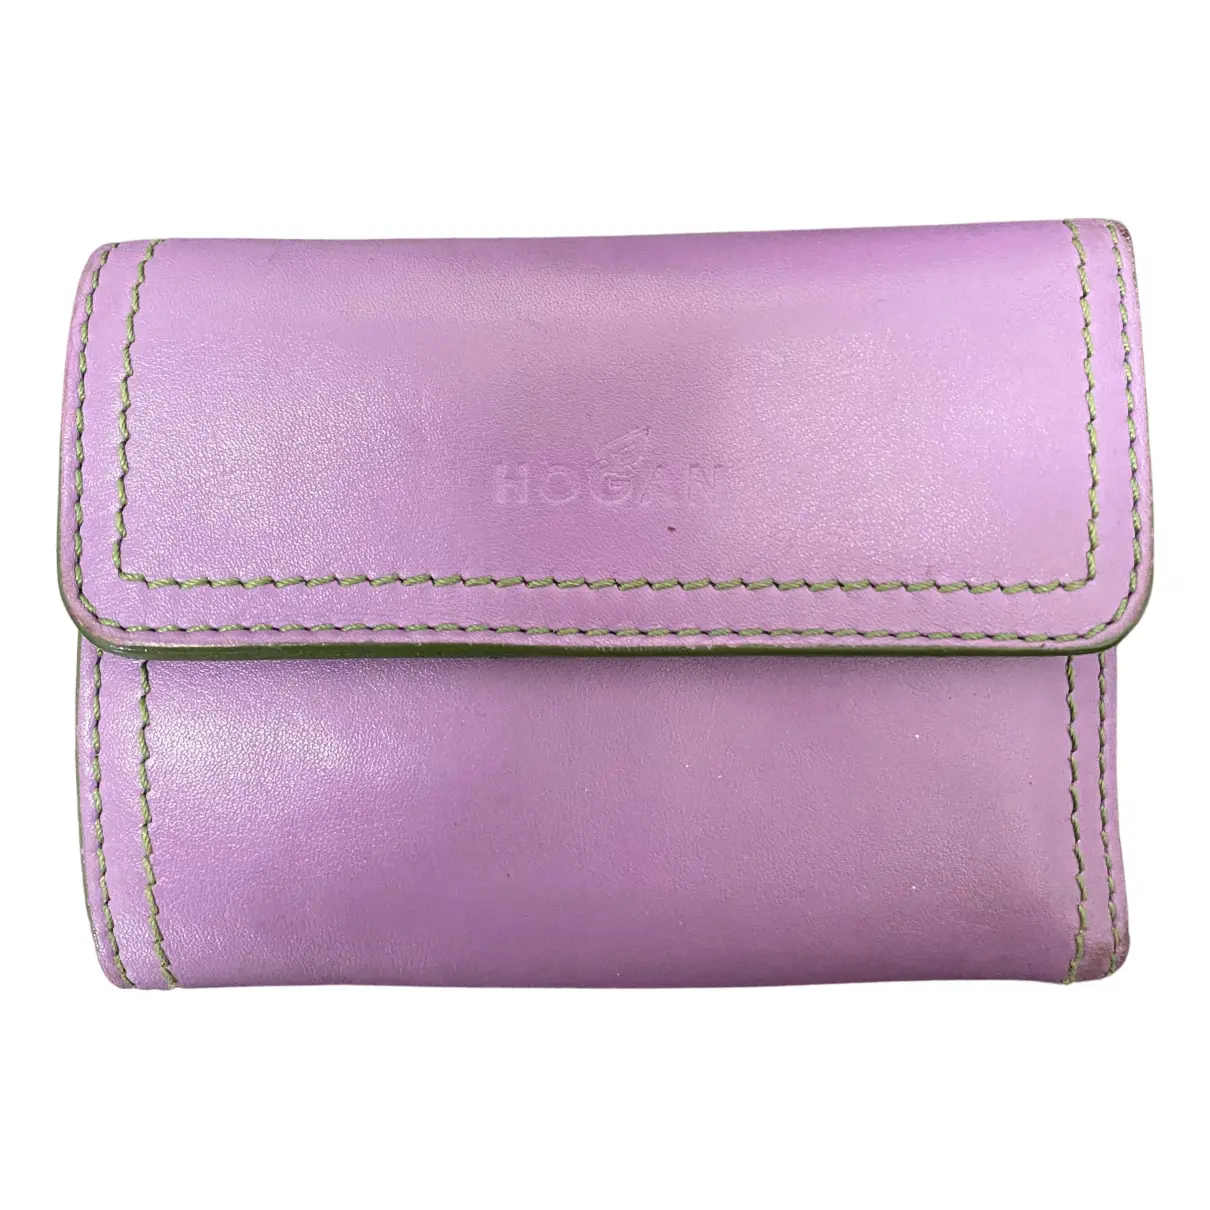 Leather wallet Hogan